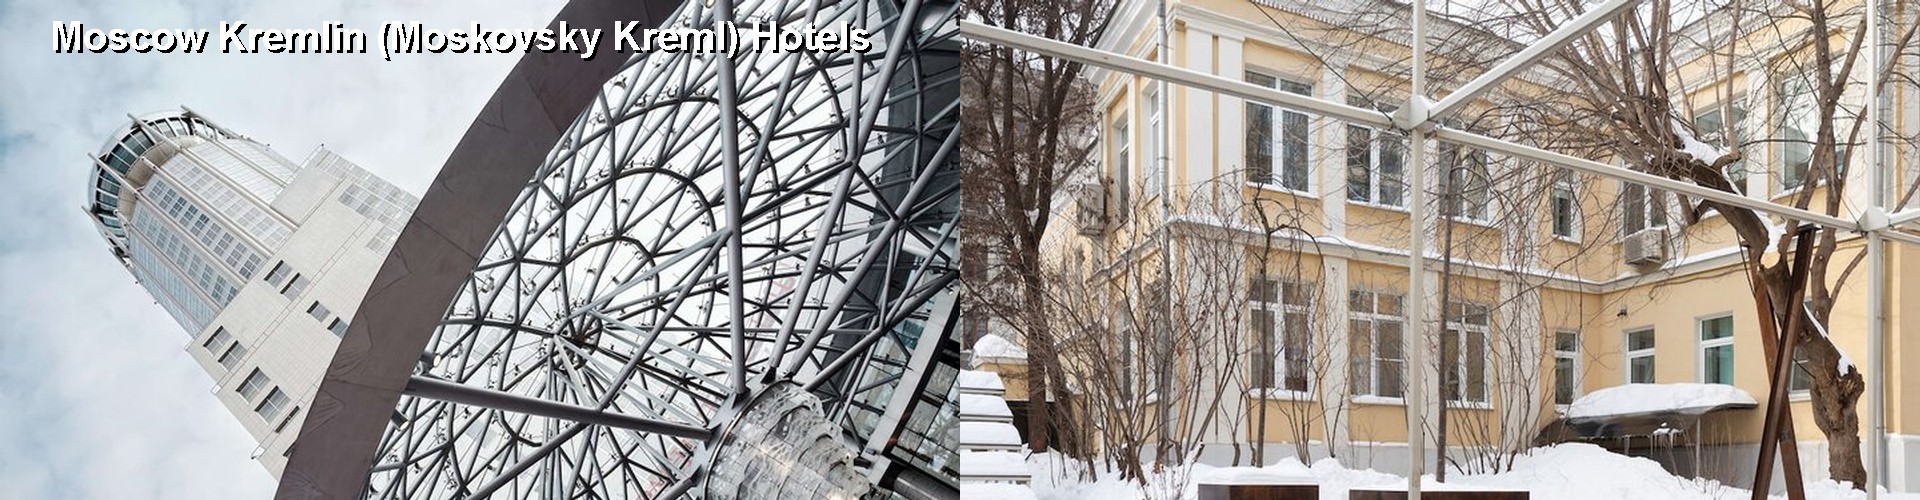 5 Best Hotels near Moscow Kremlin (Moskovsky Kreml)